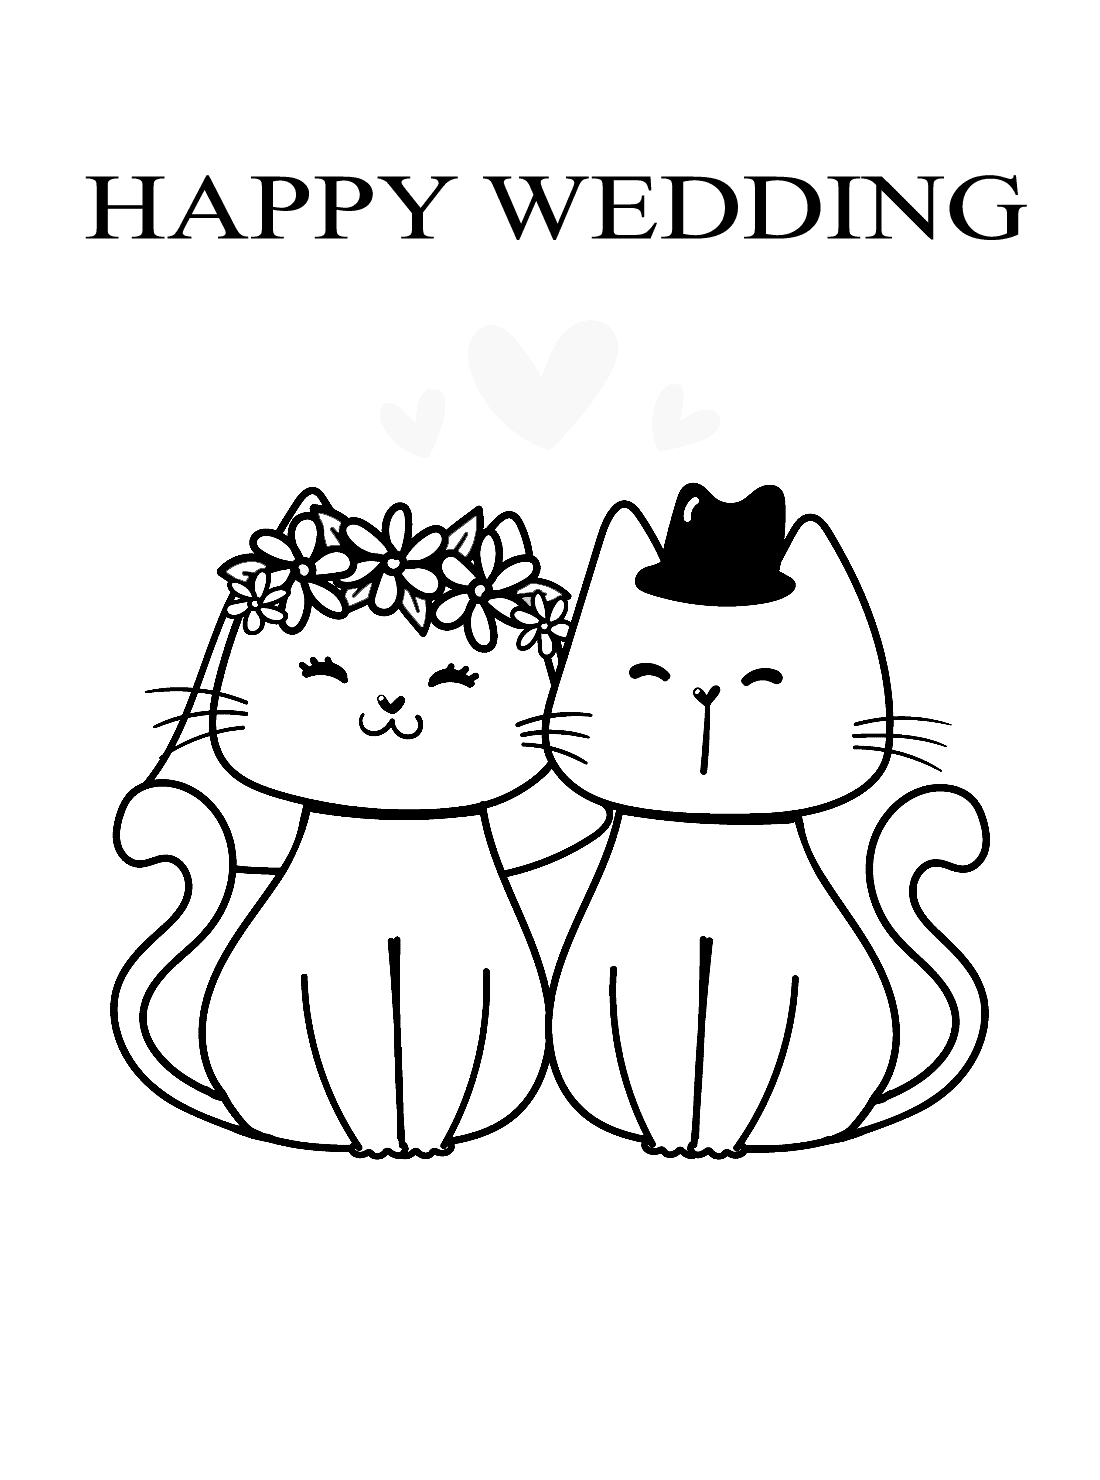 Happy Wedding Cats